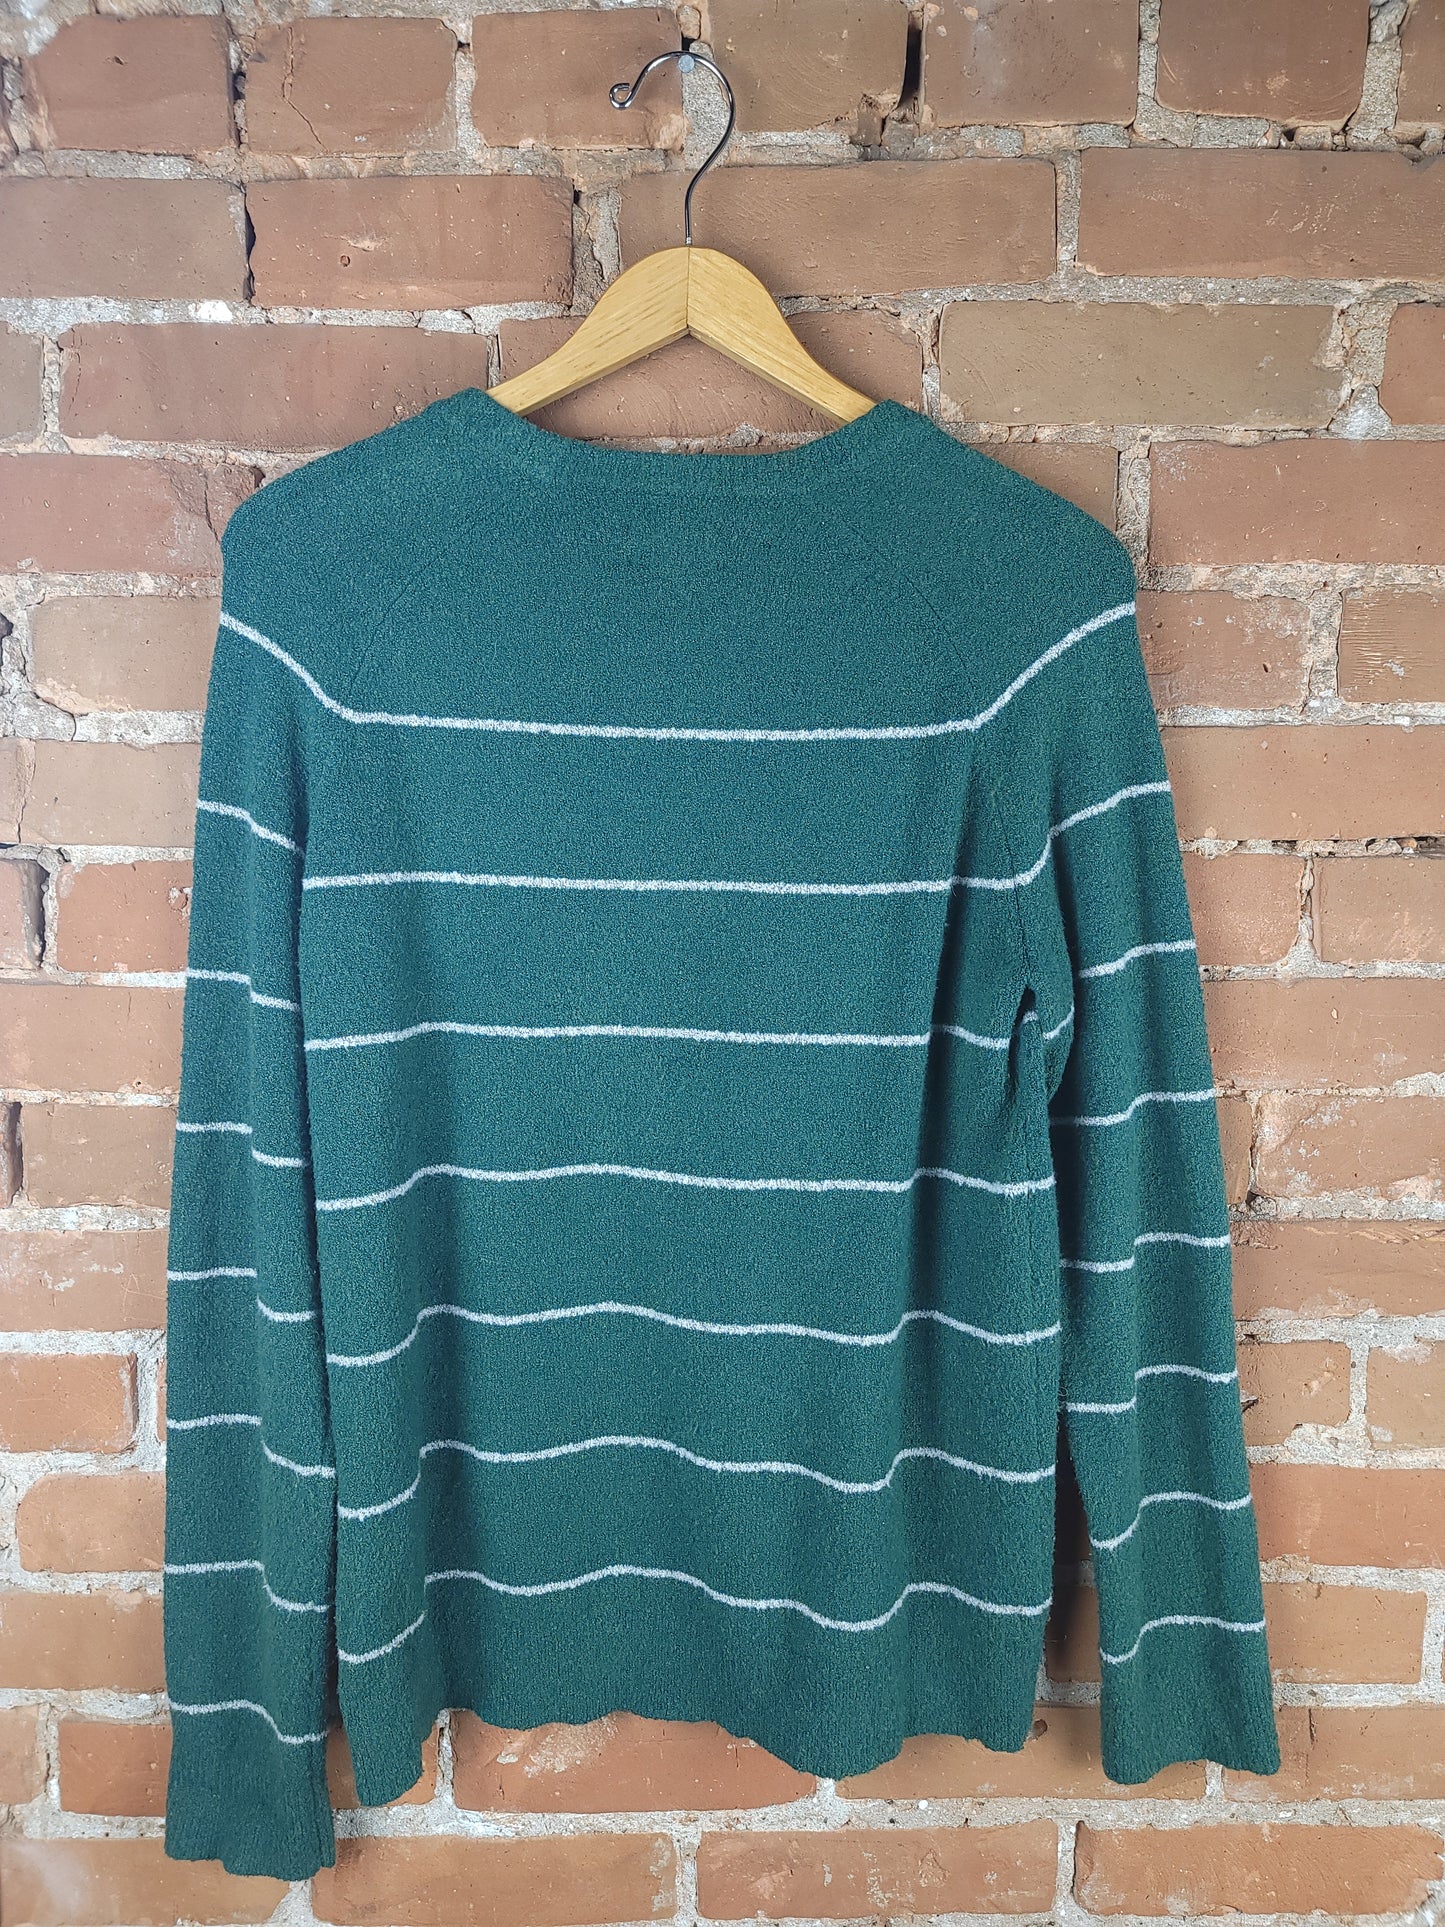 Frank and Oak Green Striped Sweater